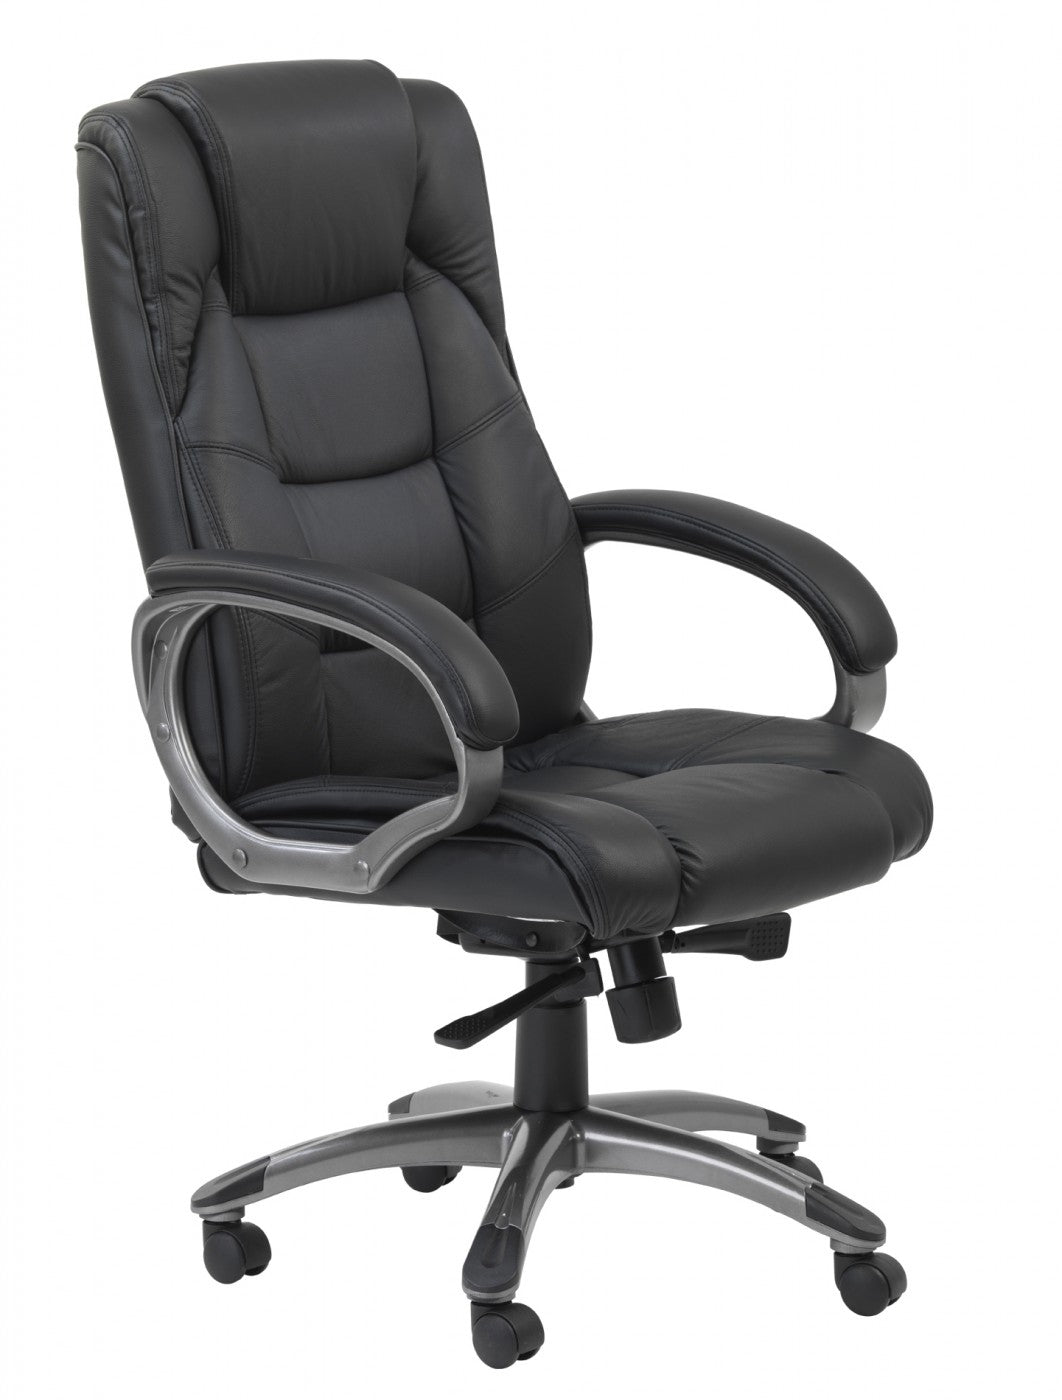 Northland Black High Back Leather Chair - AOC6332-L-BK